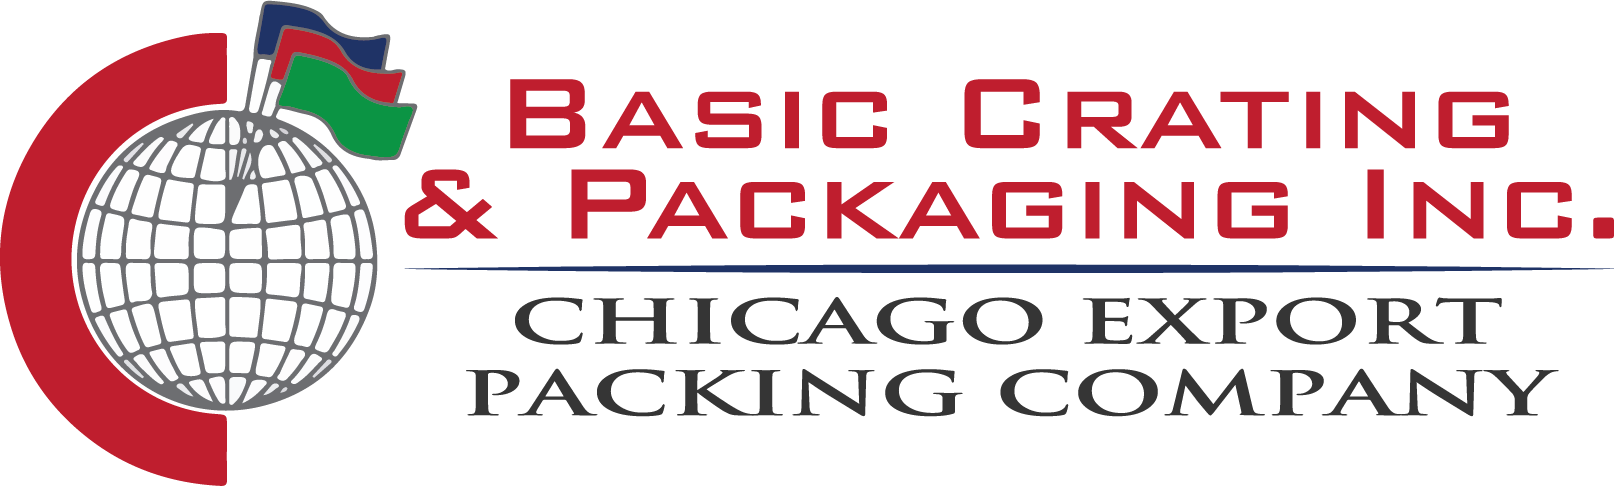 Basic Crating & Packaging, Inc.